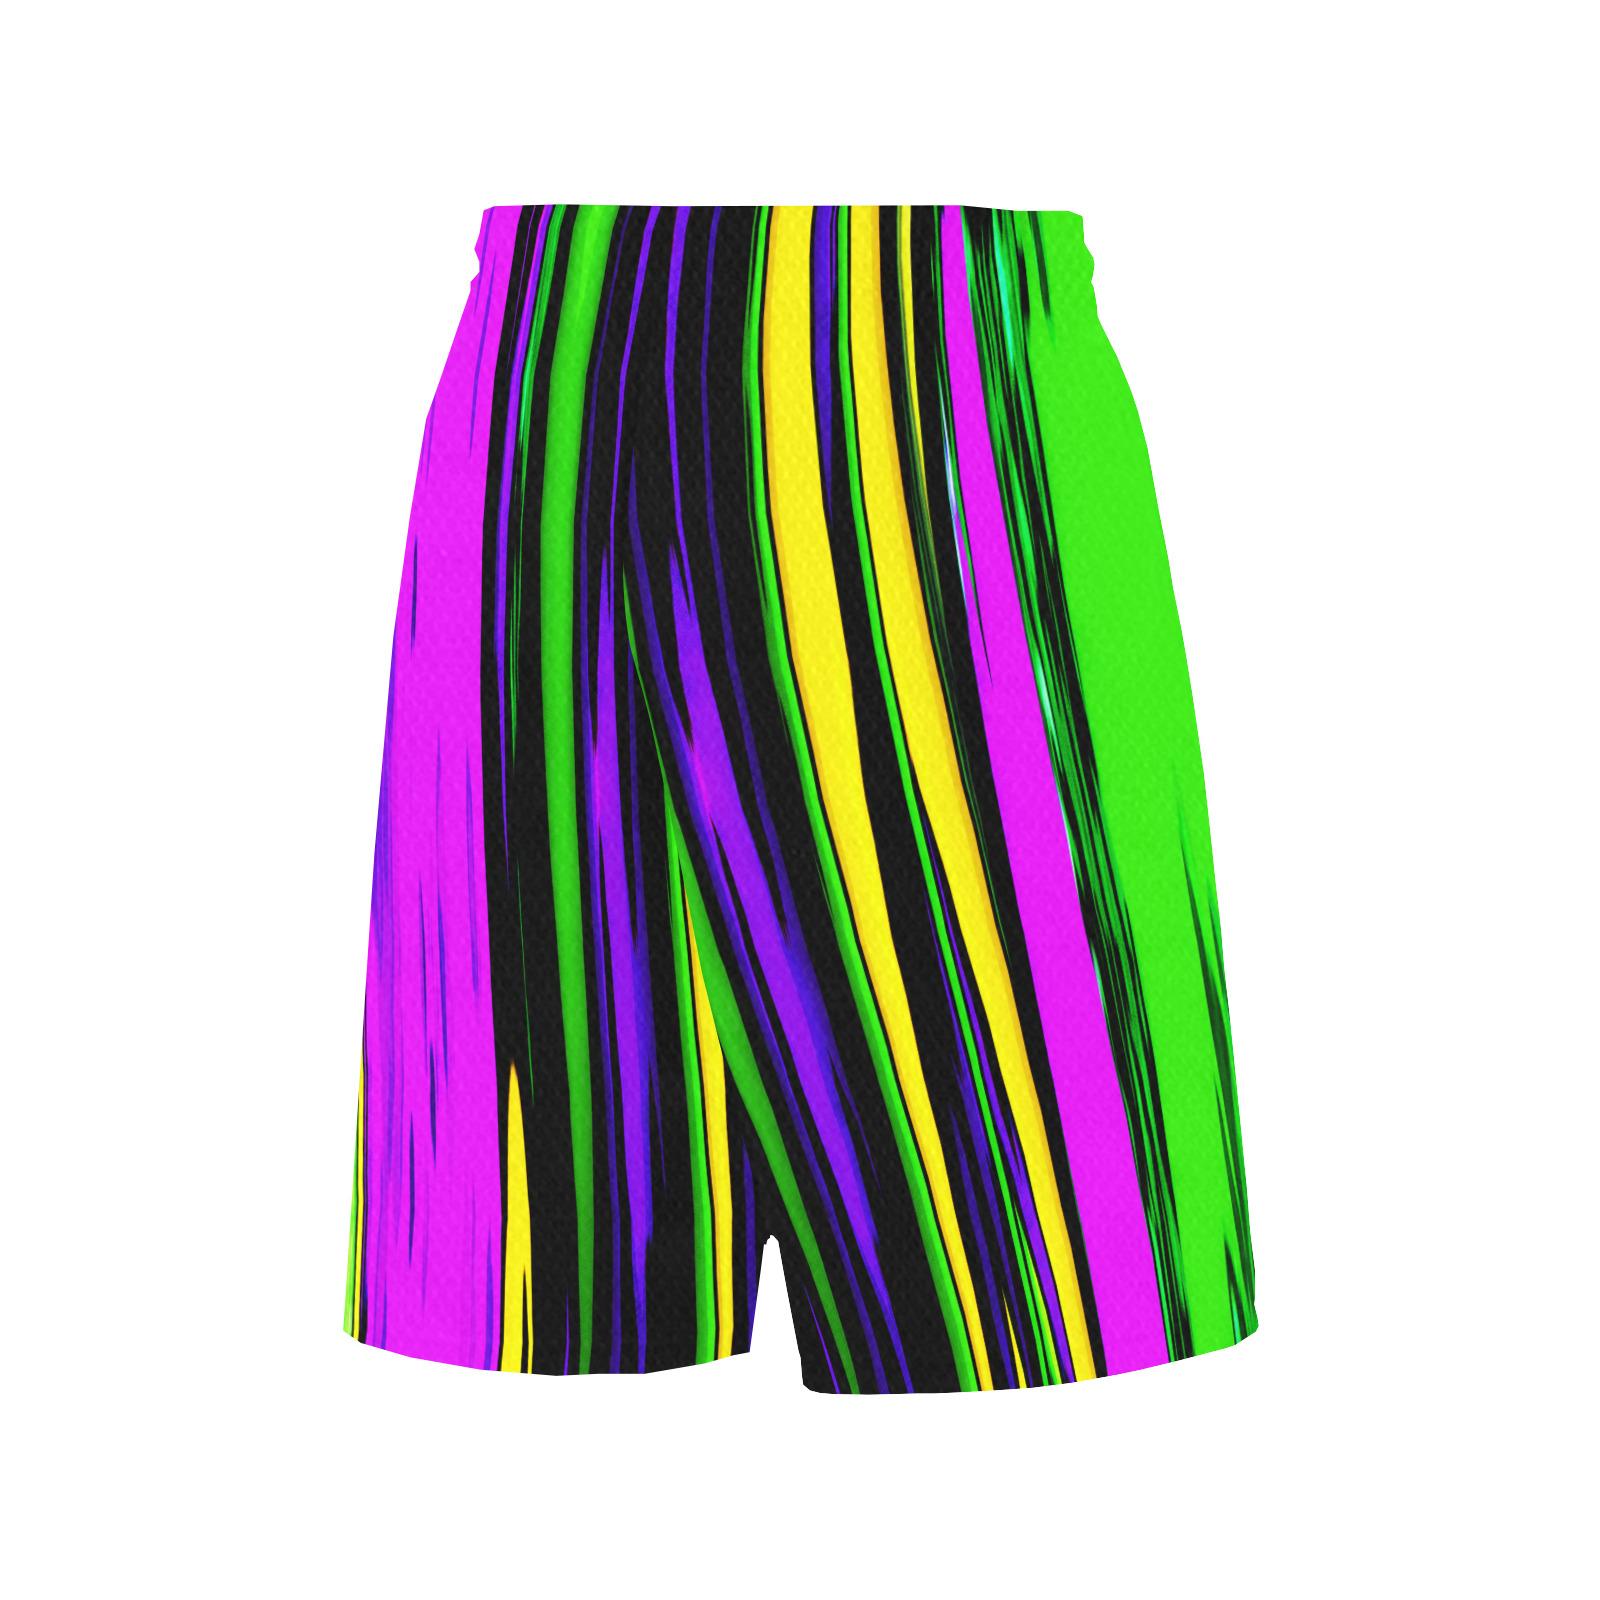 Mardi Gras Stripes All Over Print Basketball Shorts